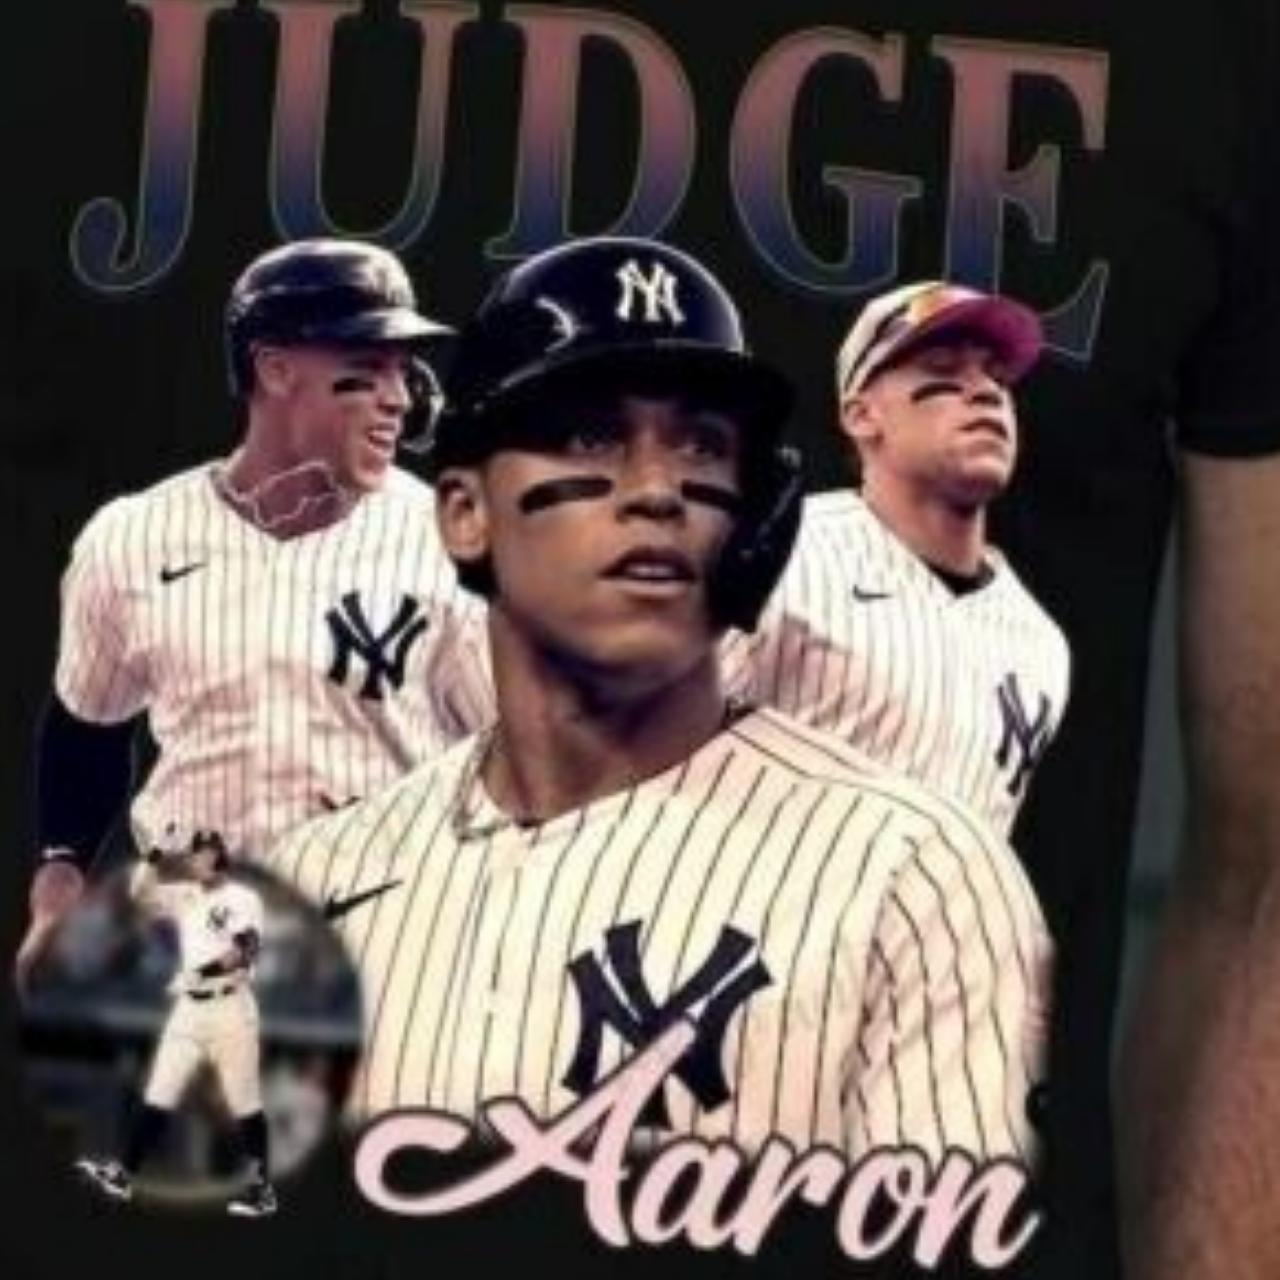 Aaron Judge Gavel NY Yankees T-Shirt Sz Large New - Depop